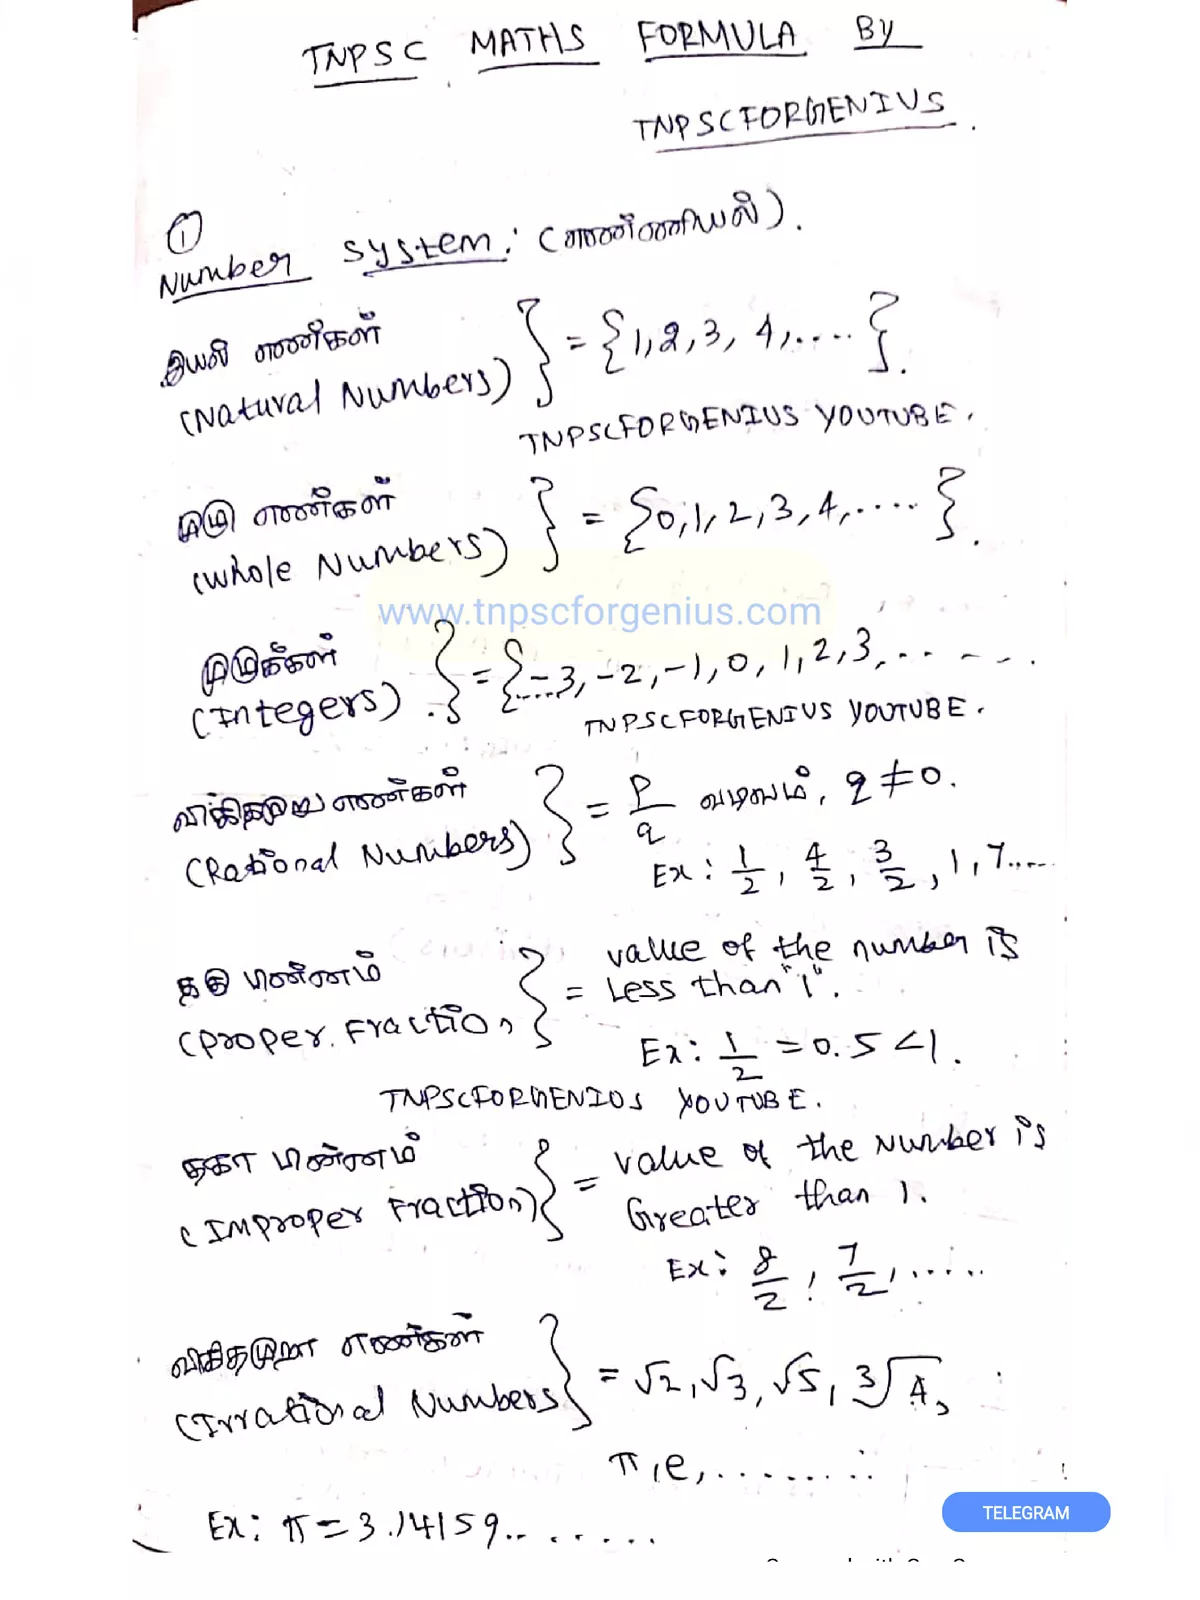 TNPSC Maths Formulas